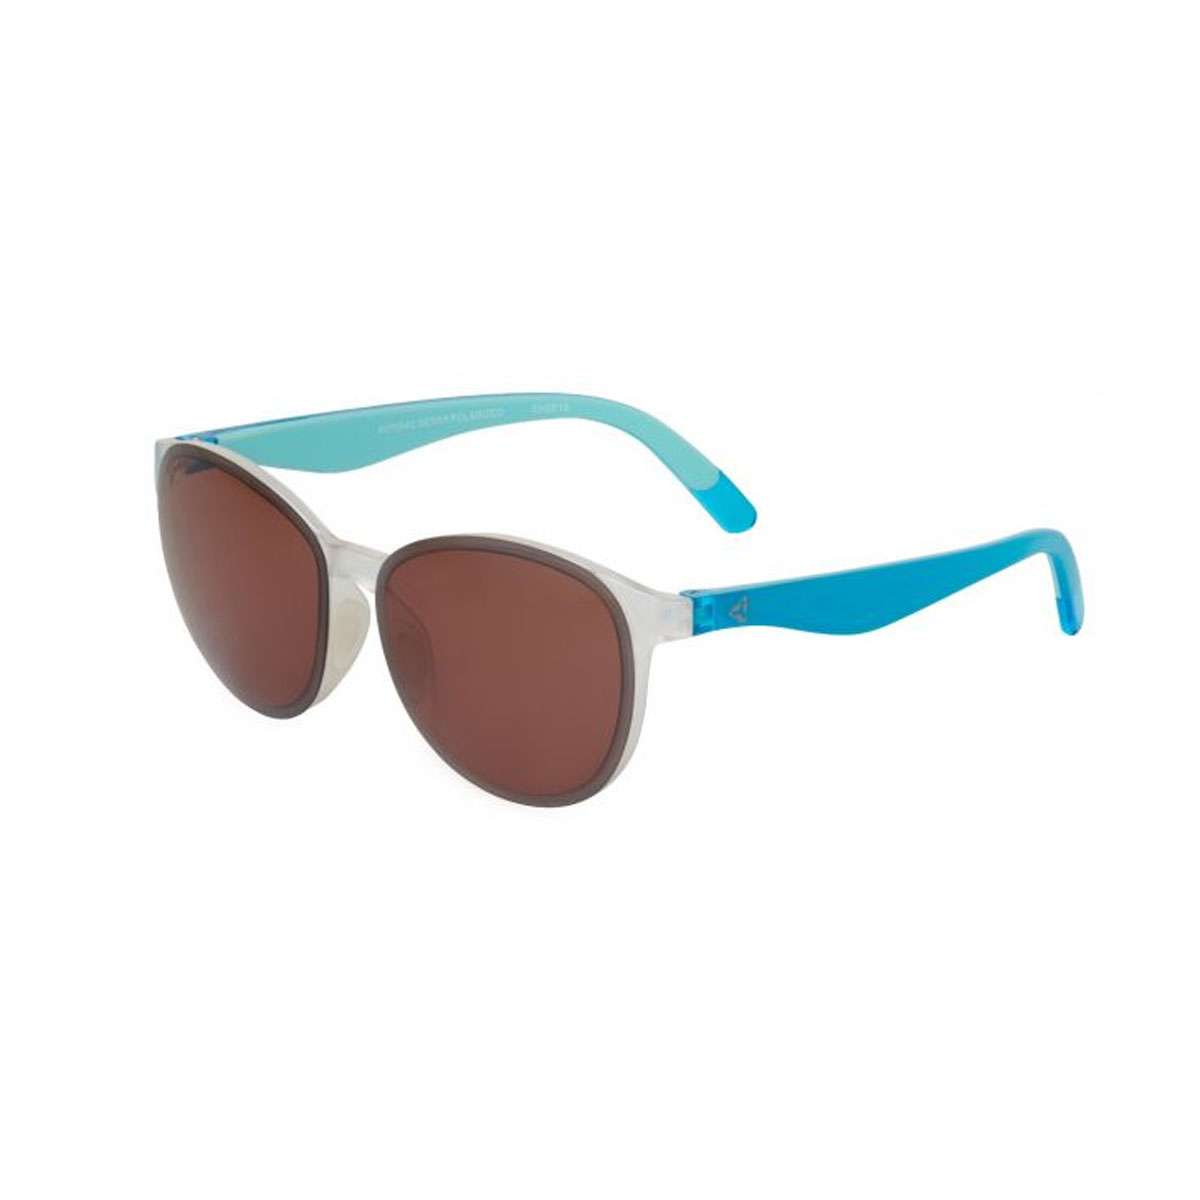 Ryders Eyewear Serra Polarized Sunglasses - Xtal Opal Blue Frame/Rose Lens Silver FM Polarized Lens - R07004C - image 1 of 1